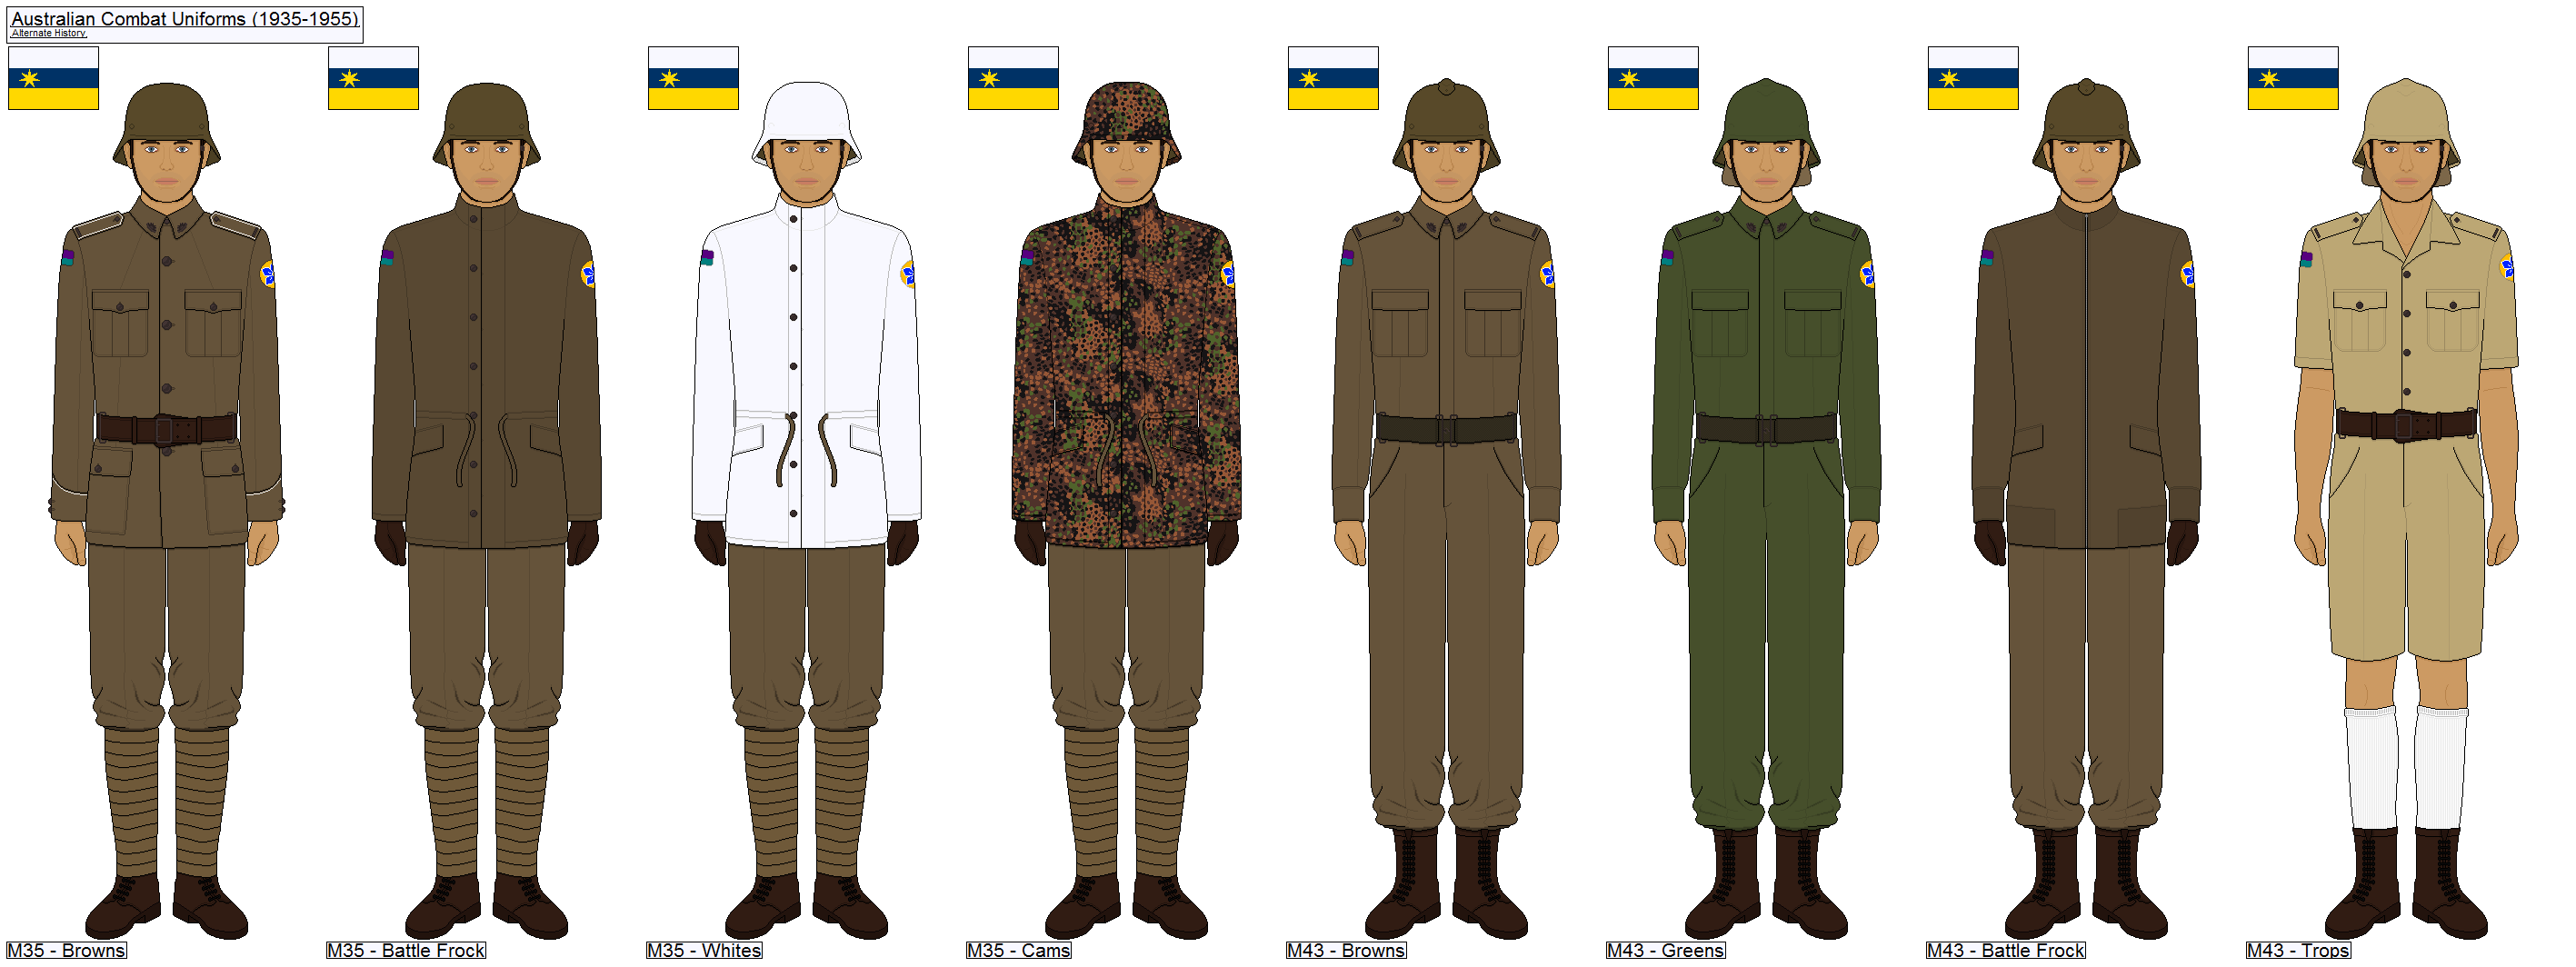 Australian Combat Uniforms (1935-1955) GrimBeans on DeviantArt